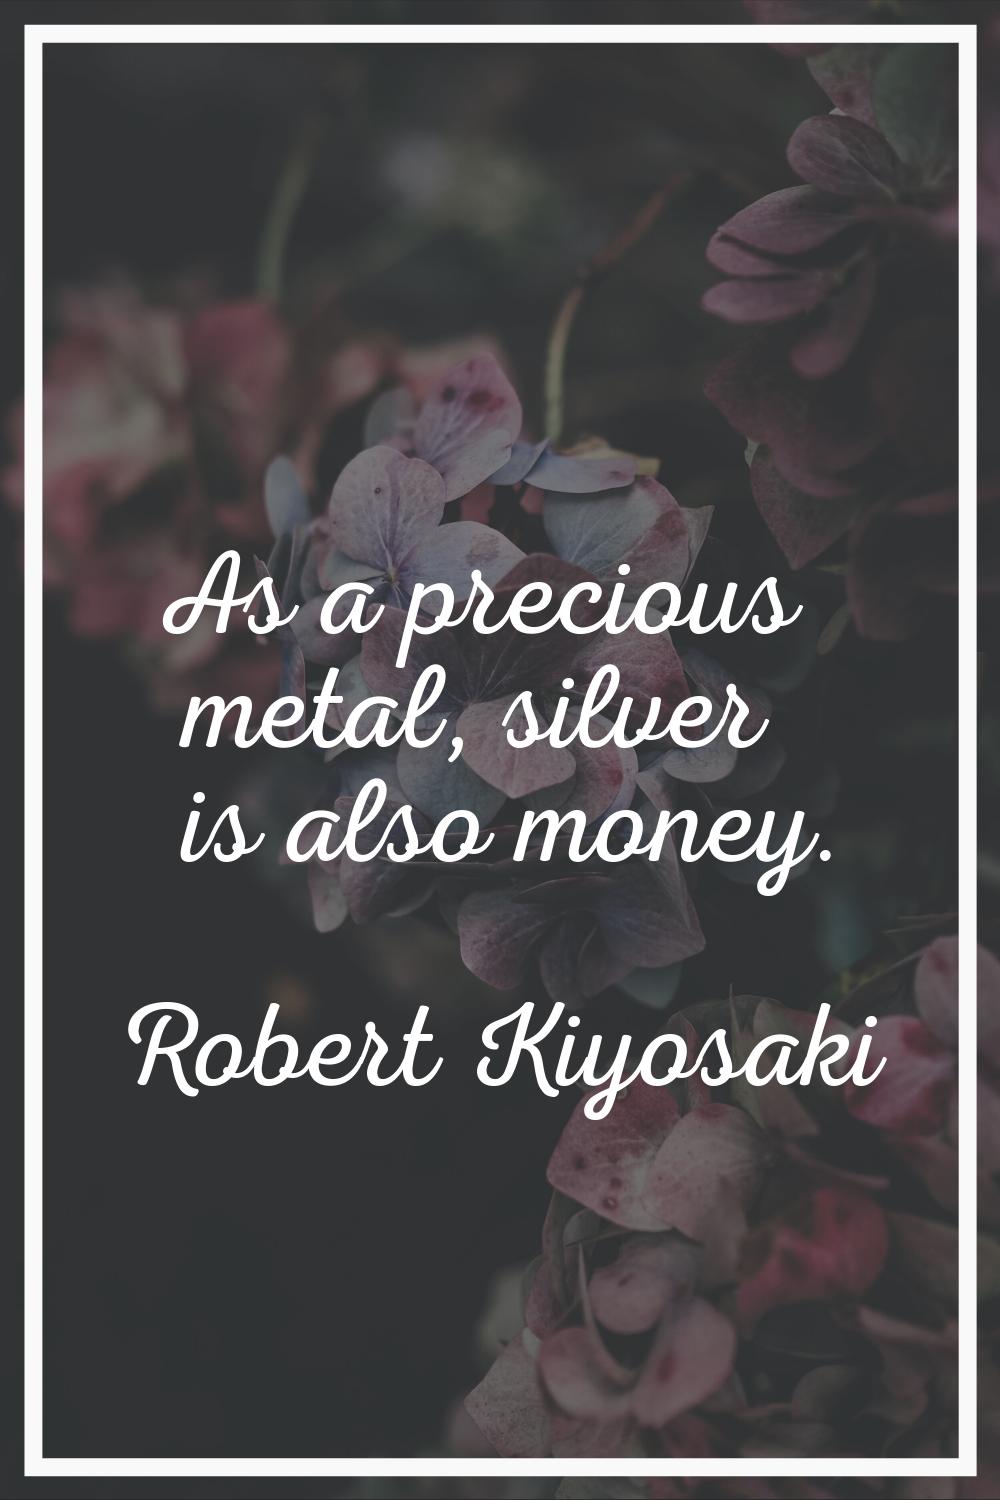 As a precious metal, silver is also money.